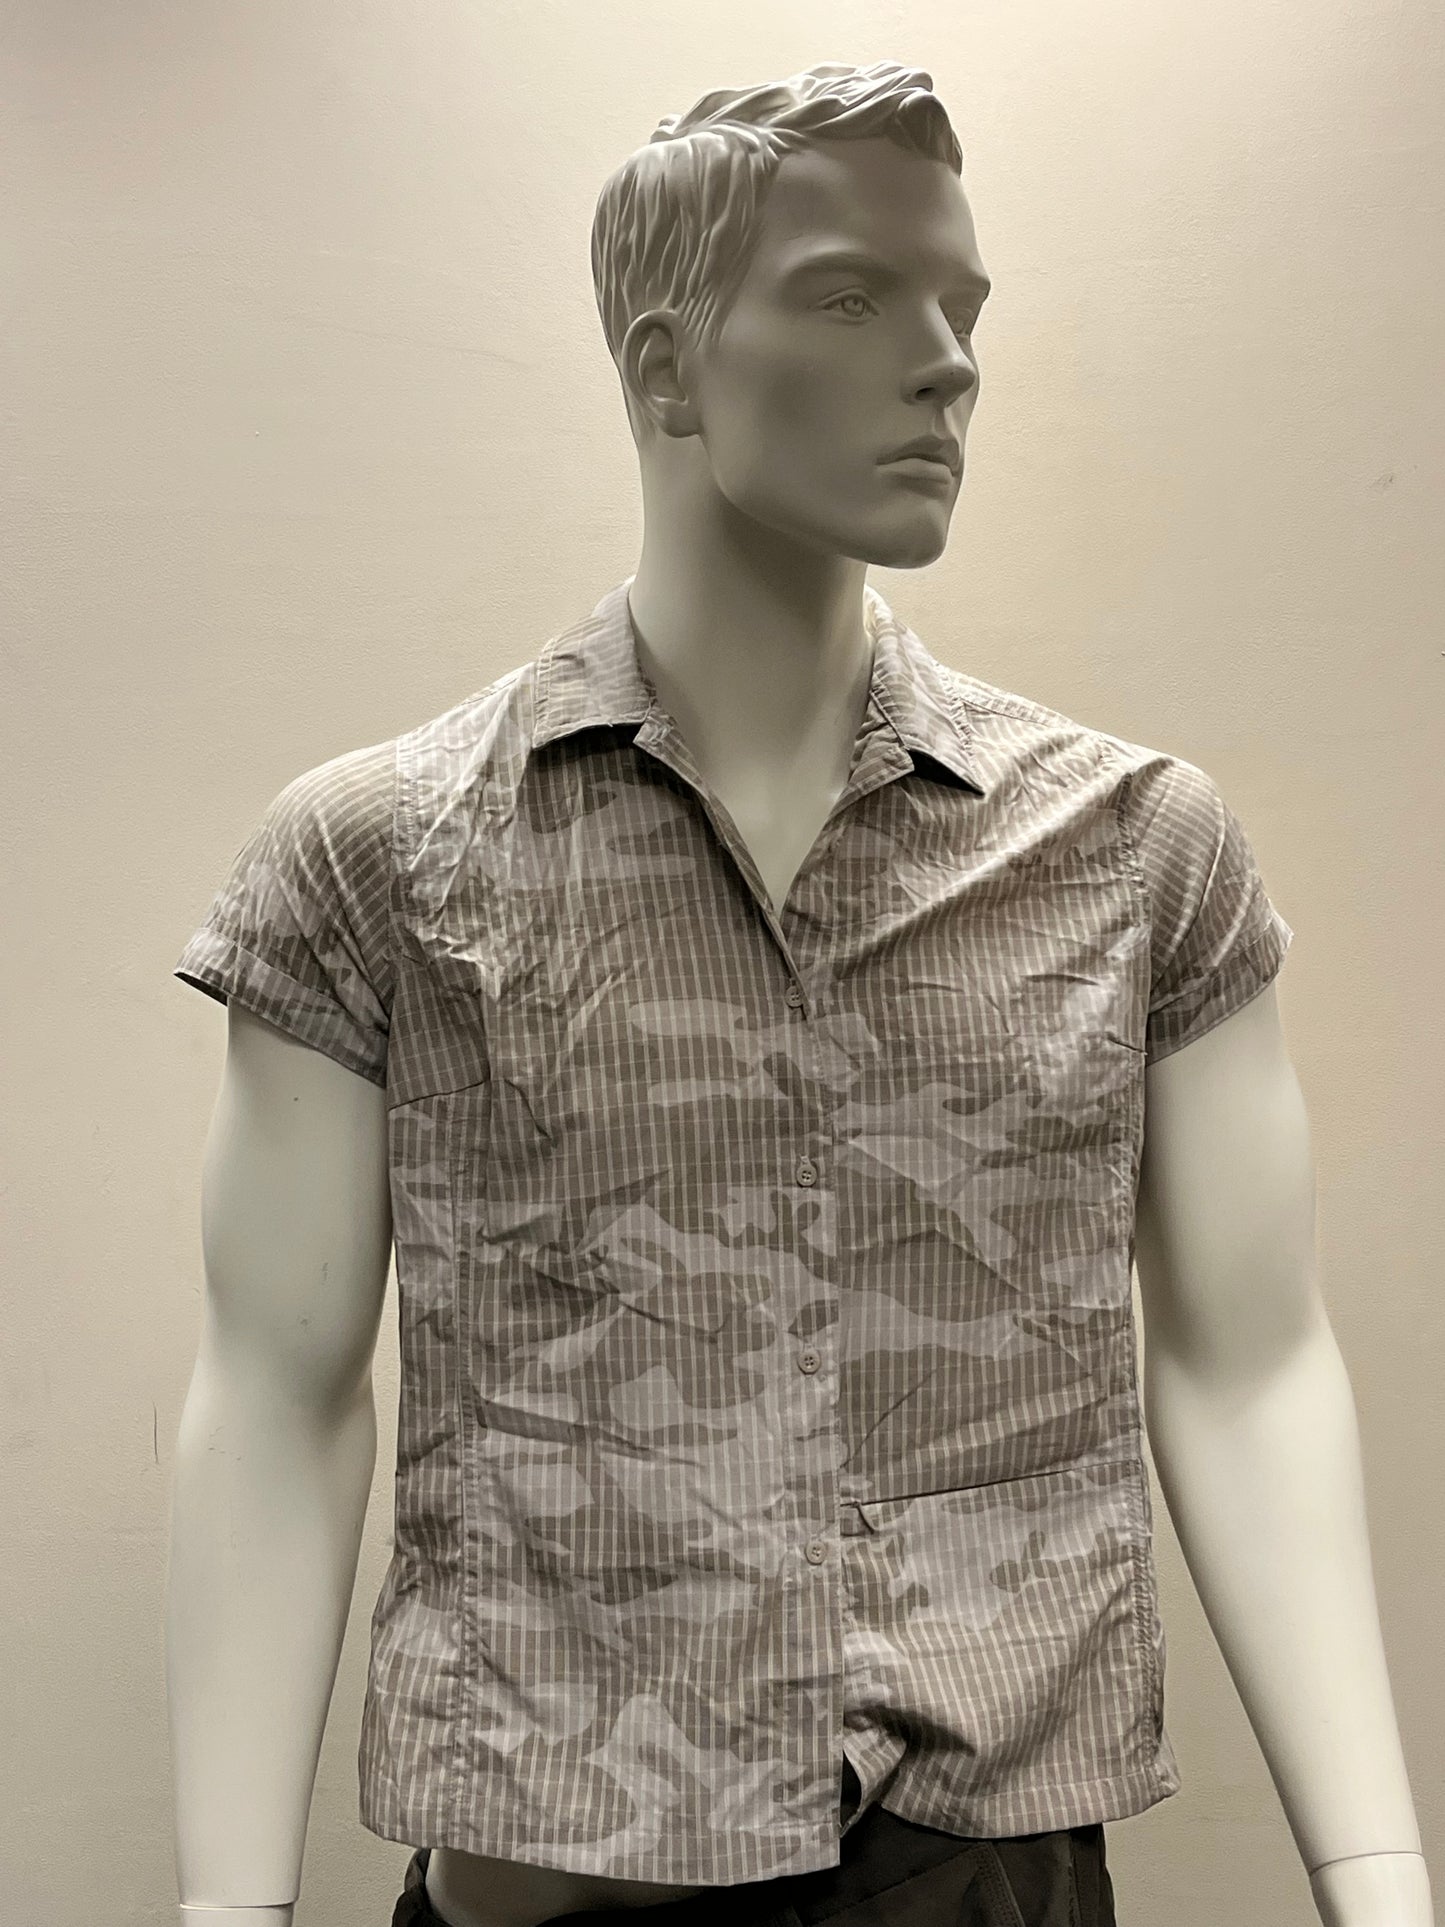 Tresspass Duo-Skin Mens Shirt in Brown Camo Print - Size XL